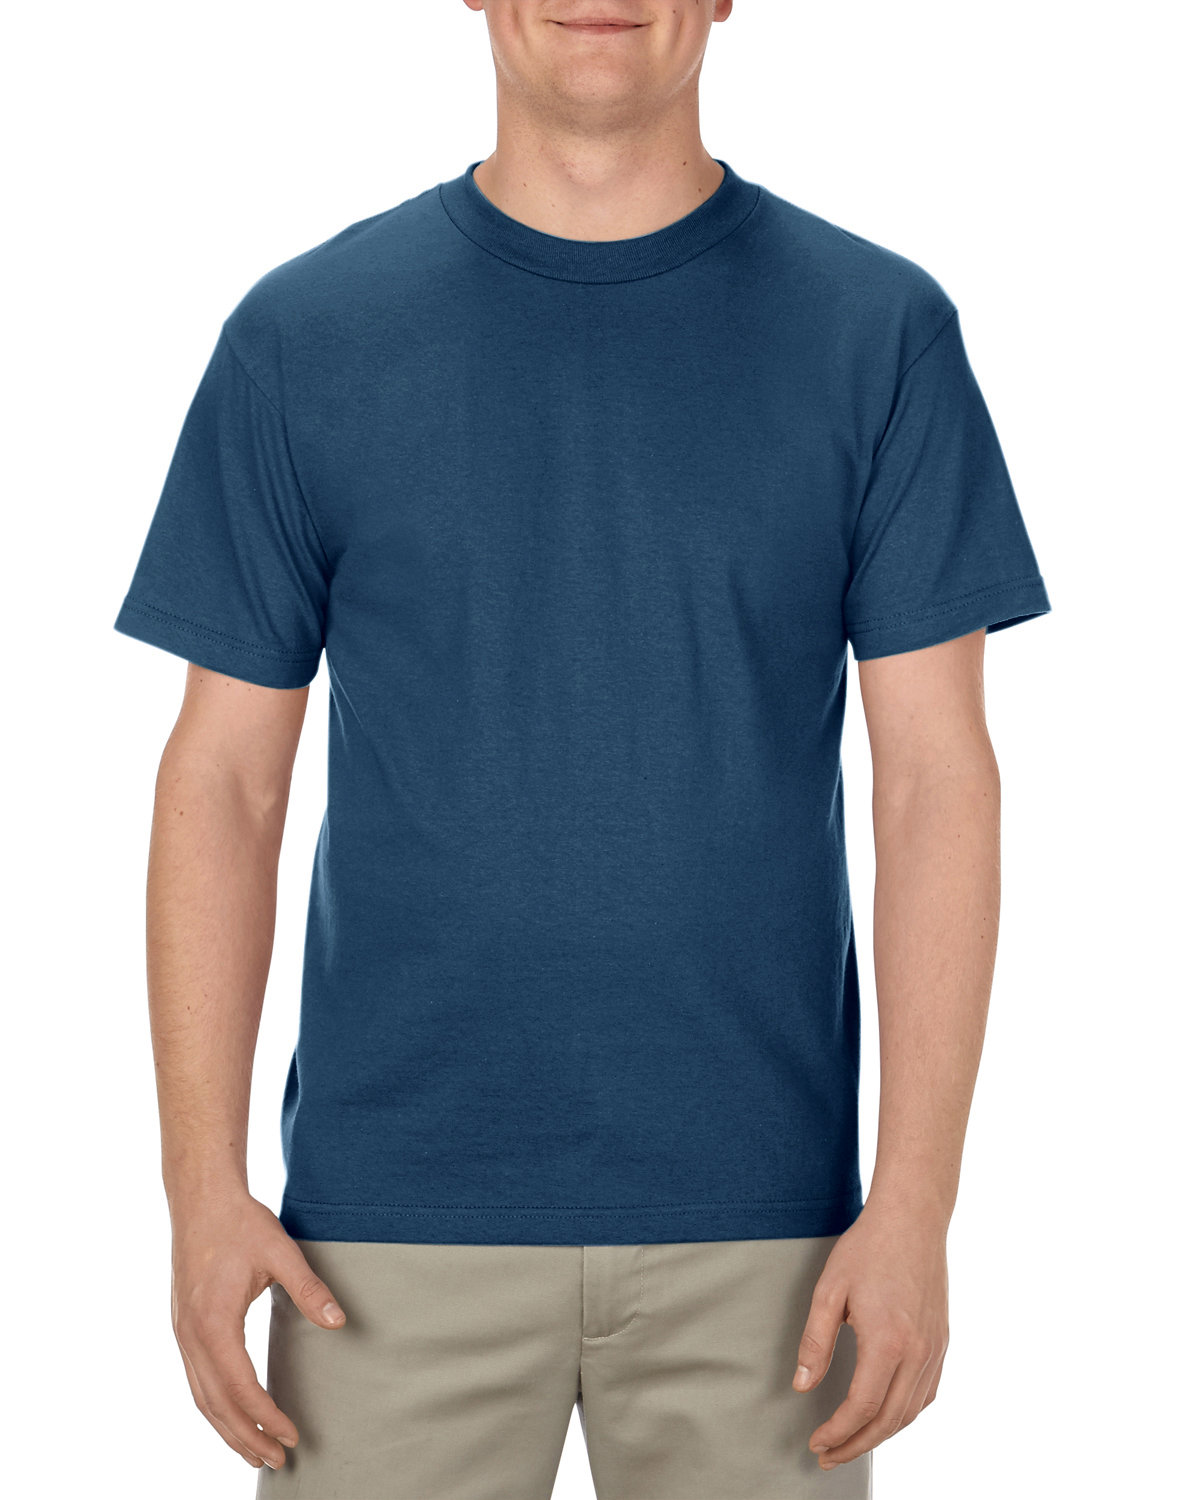 American Apparel Unisex Heavyweight Cotton T-Shirt harbor blue 